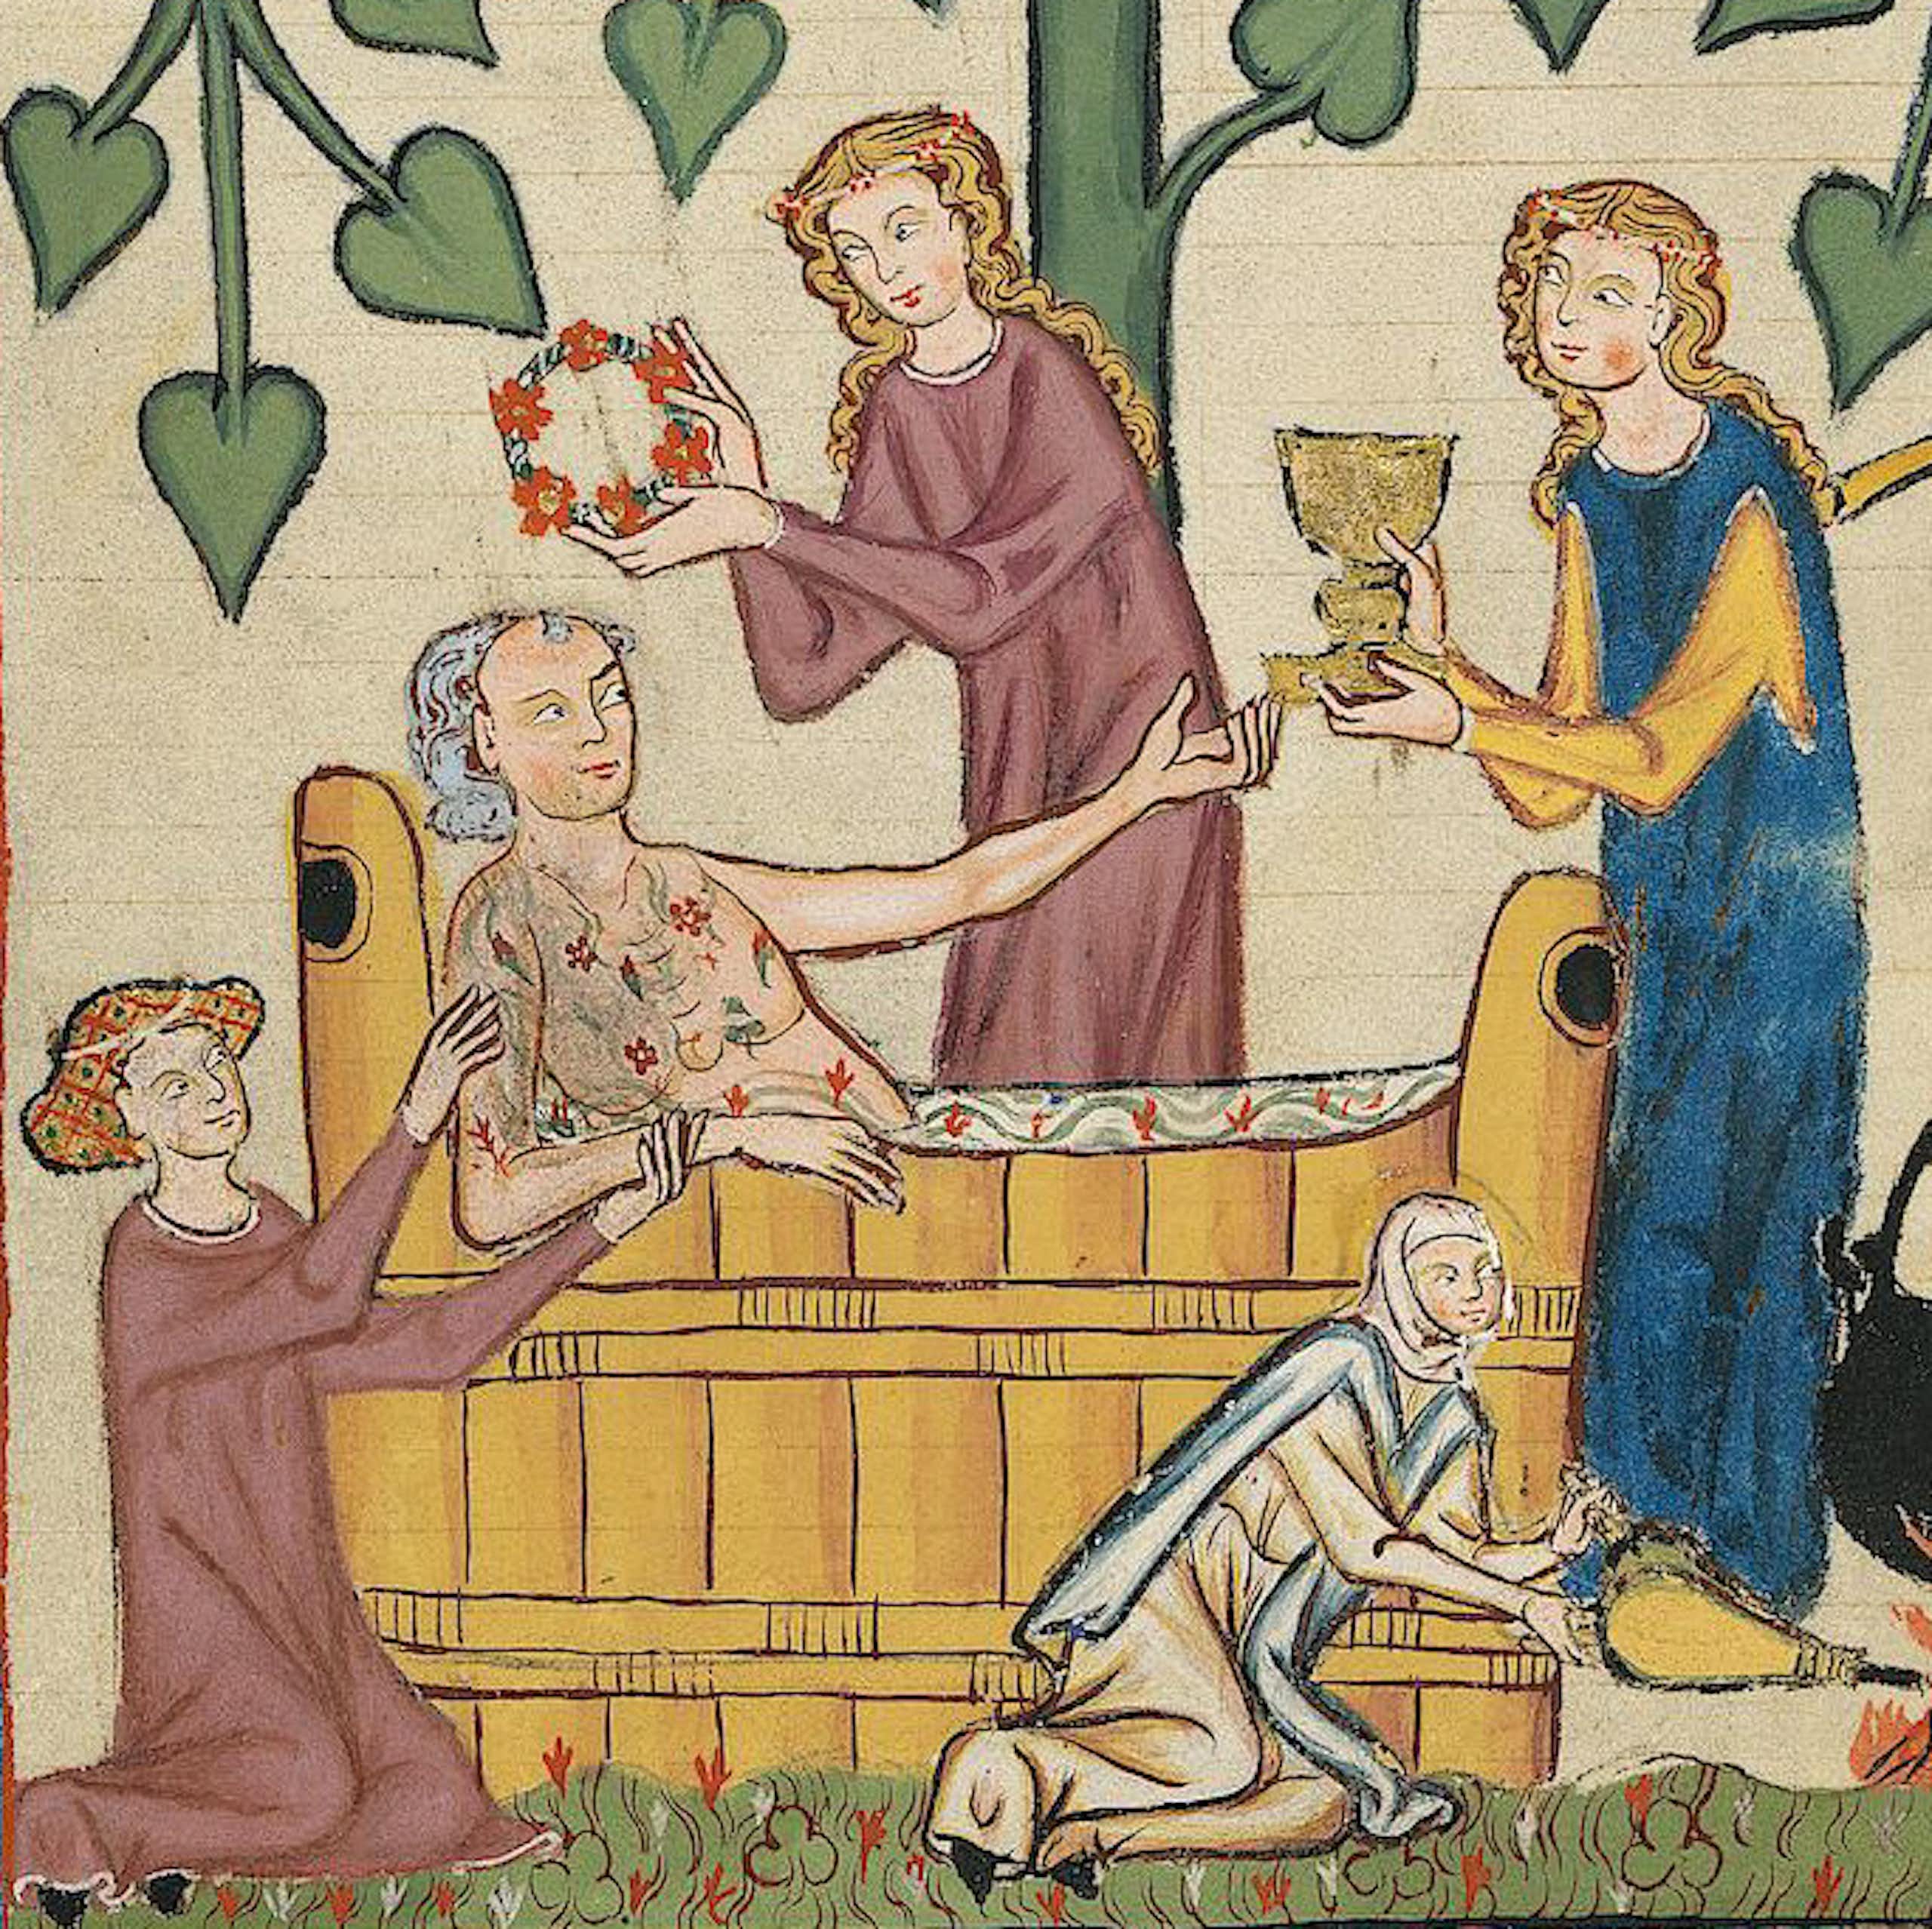 A king bathing with women preparing his bath 